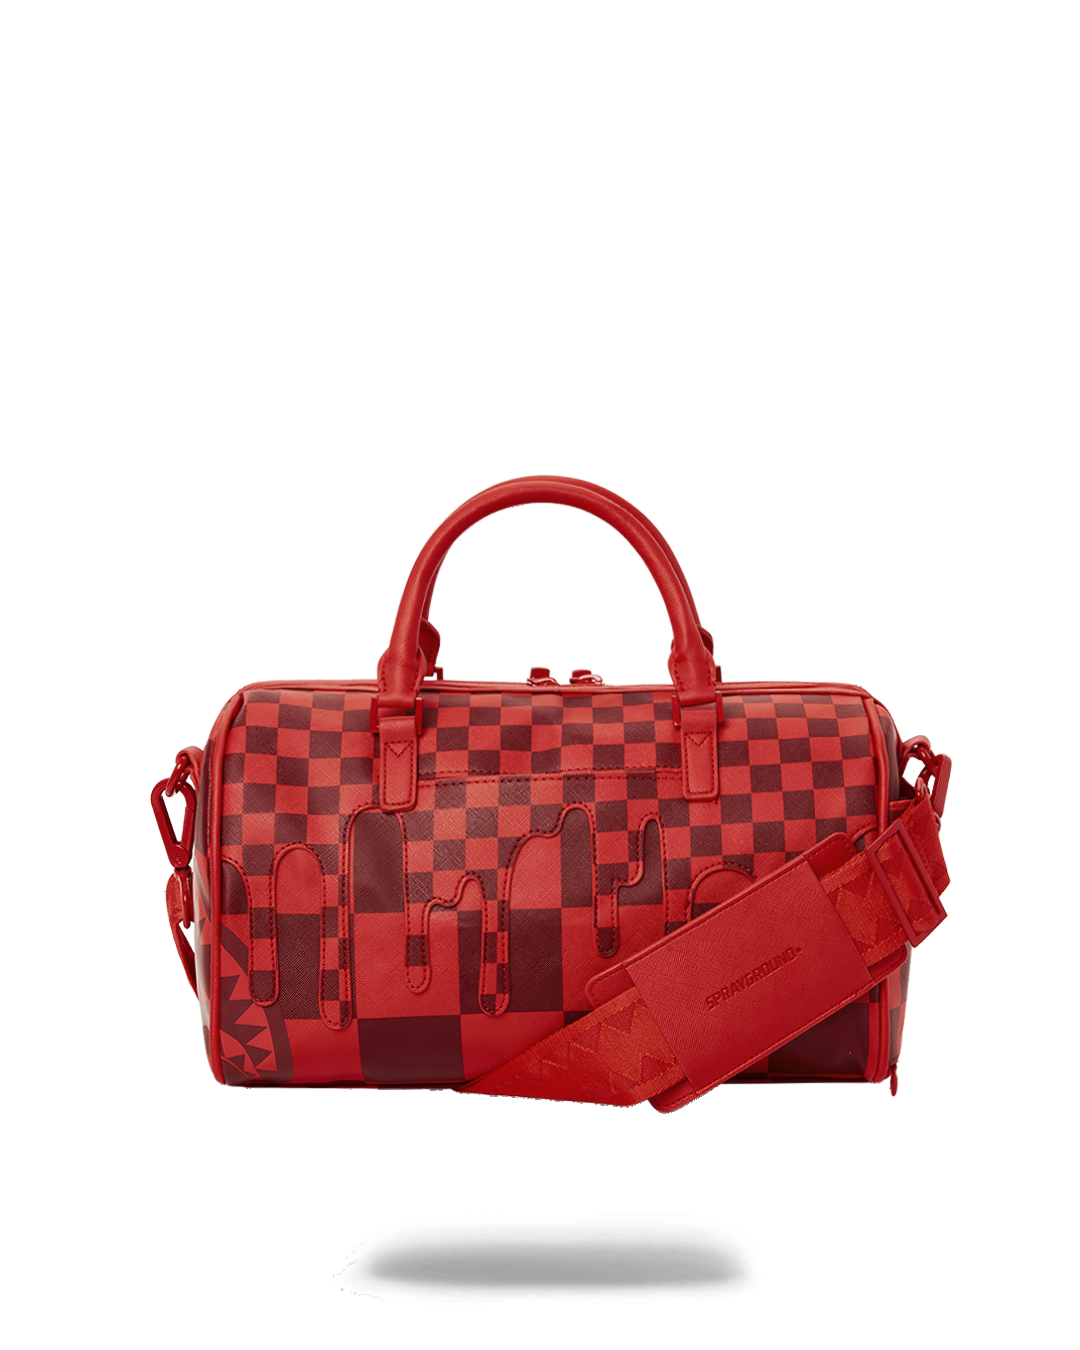 Levi Jones, Luxury vegan leather handbags